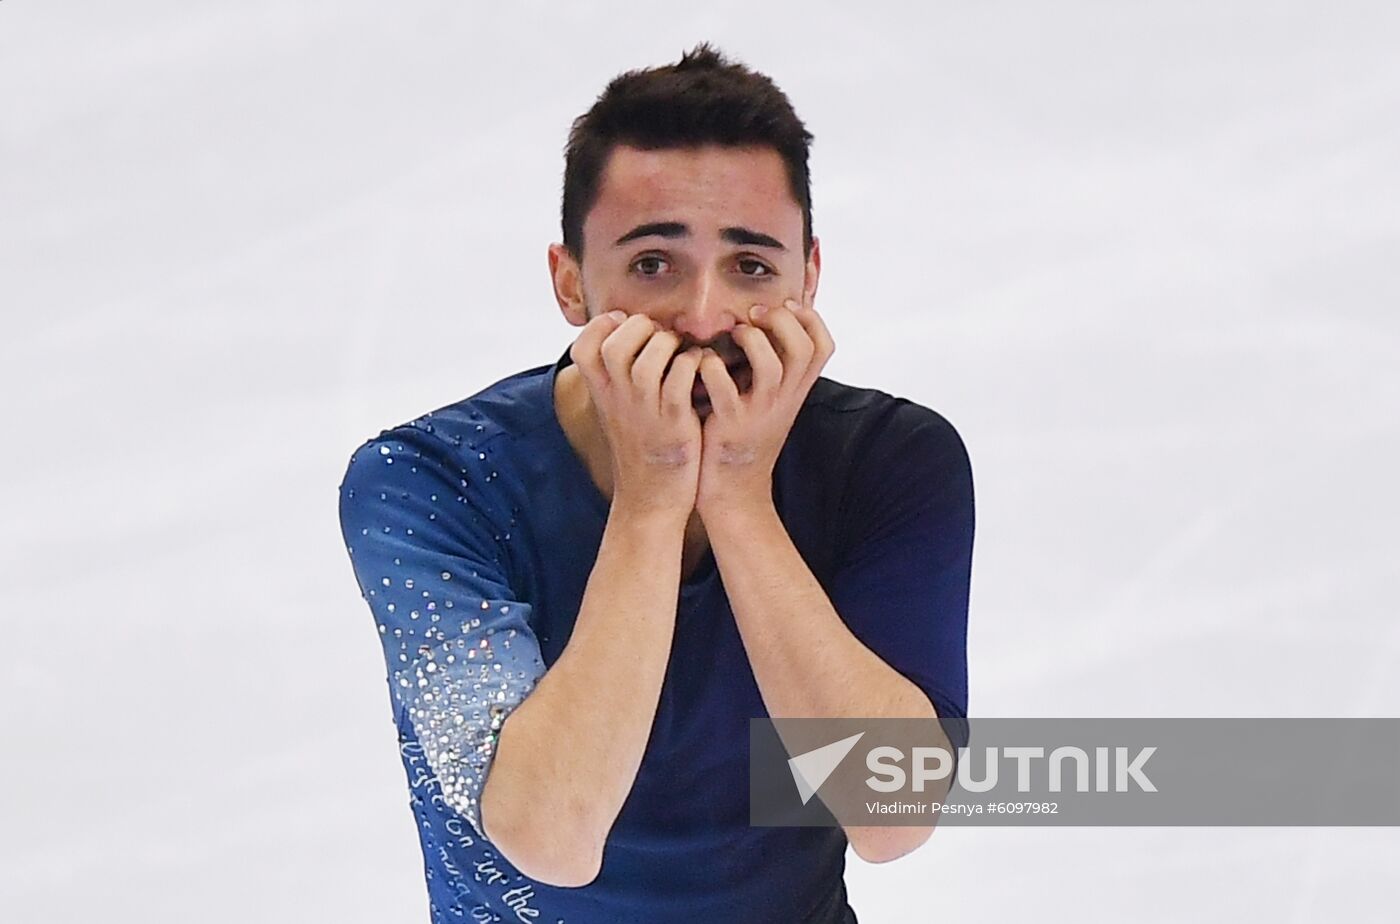 Italy Figure Skating Grand Prix Final Men